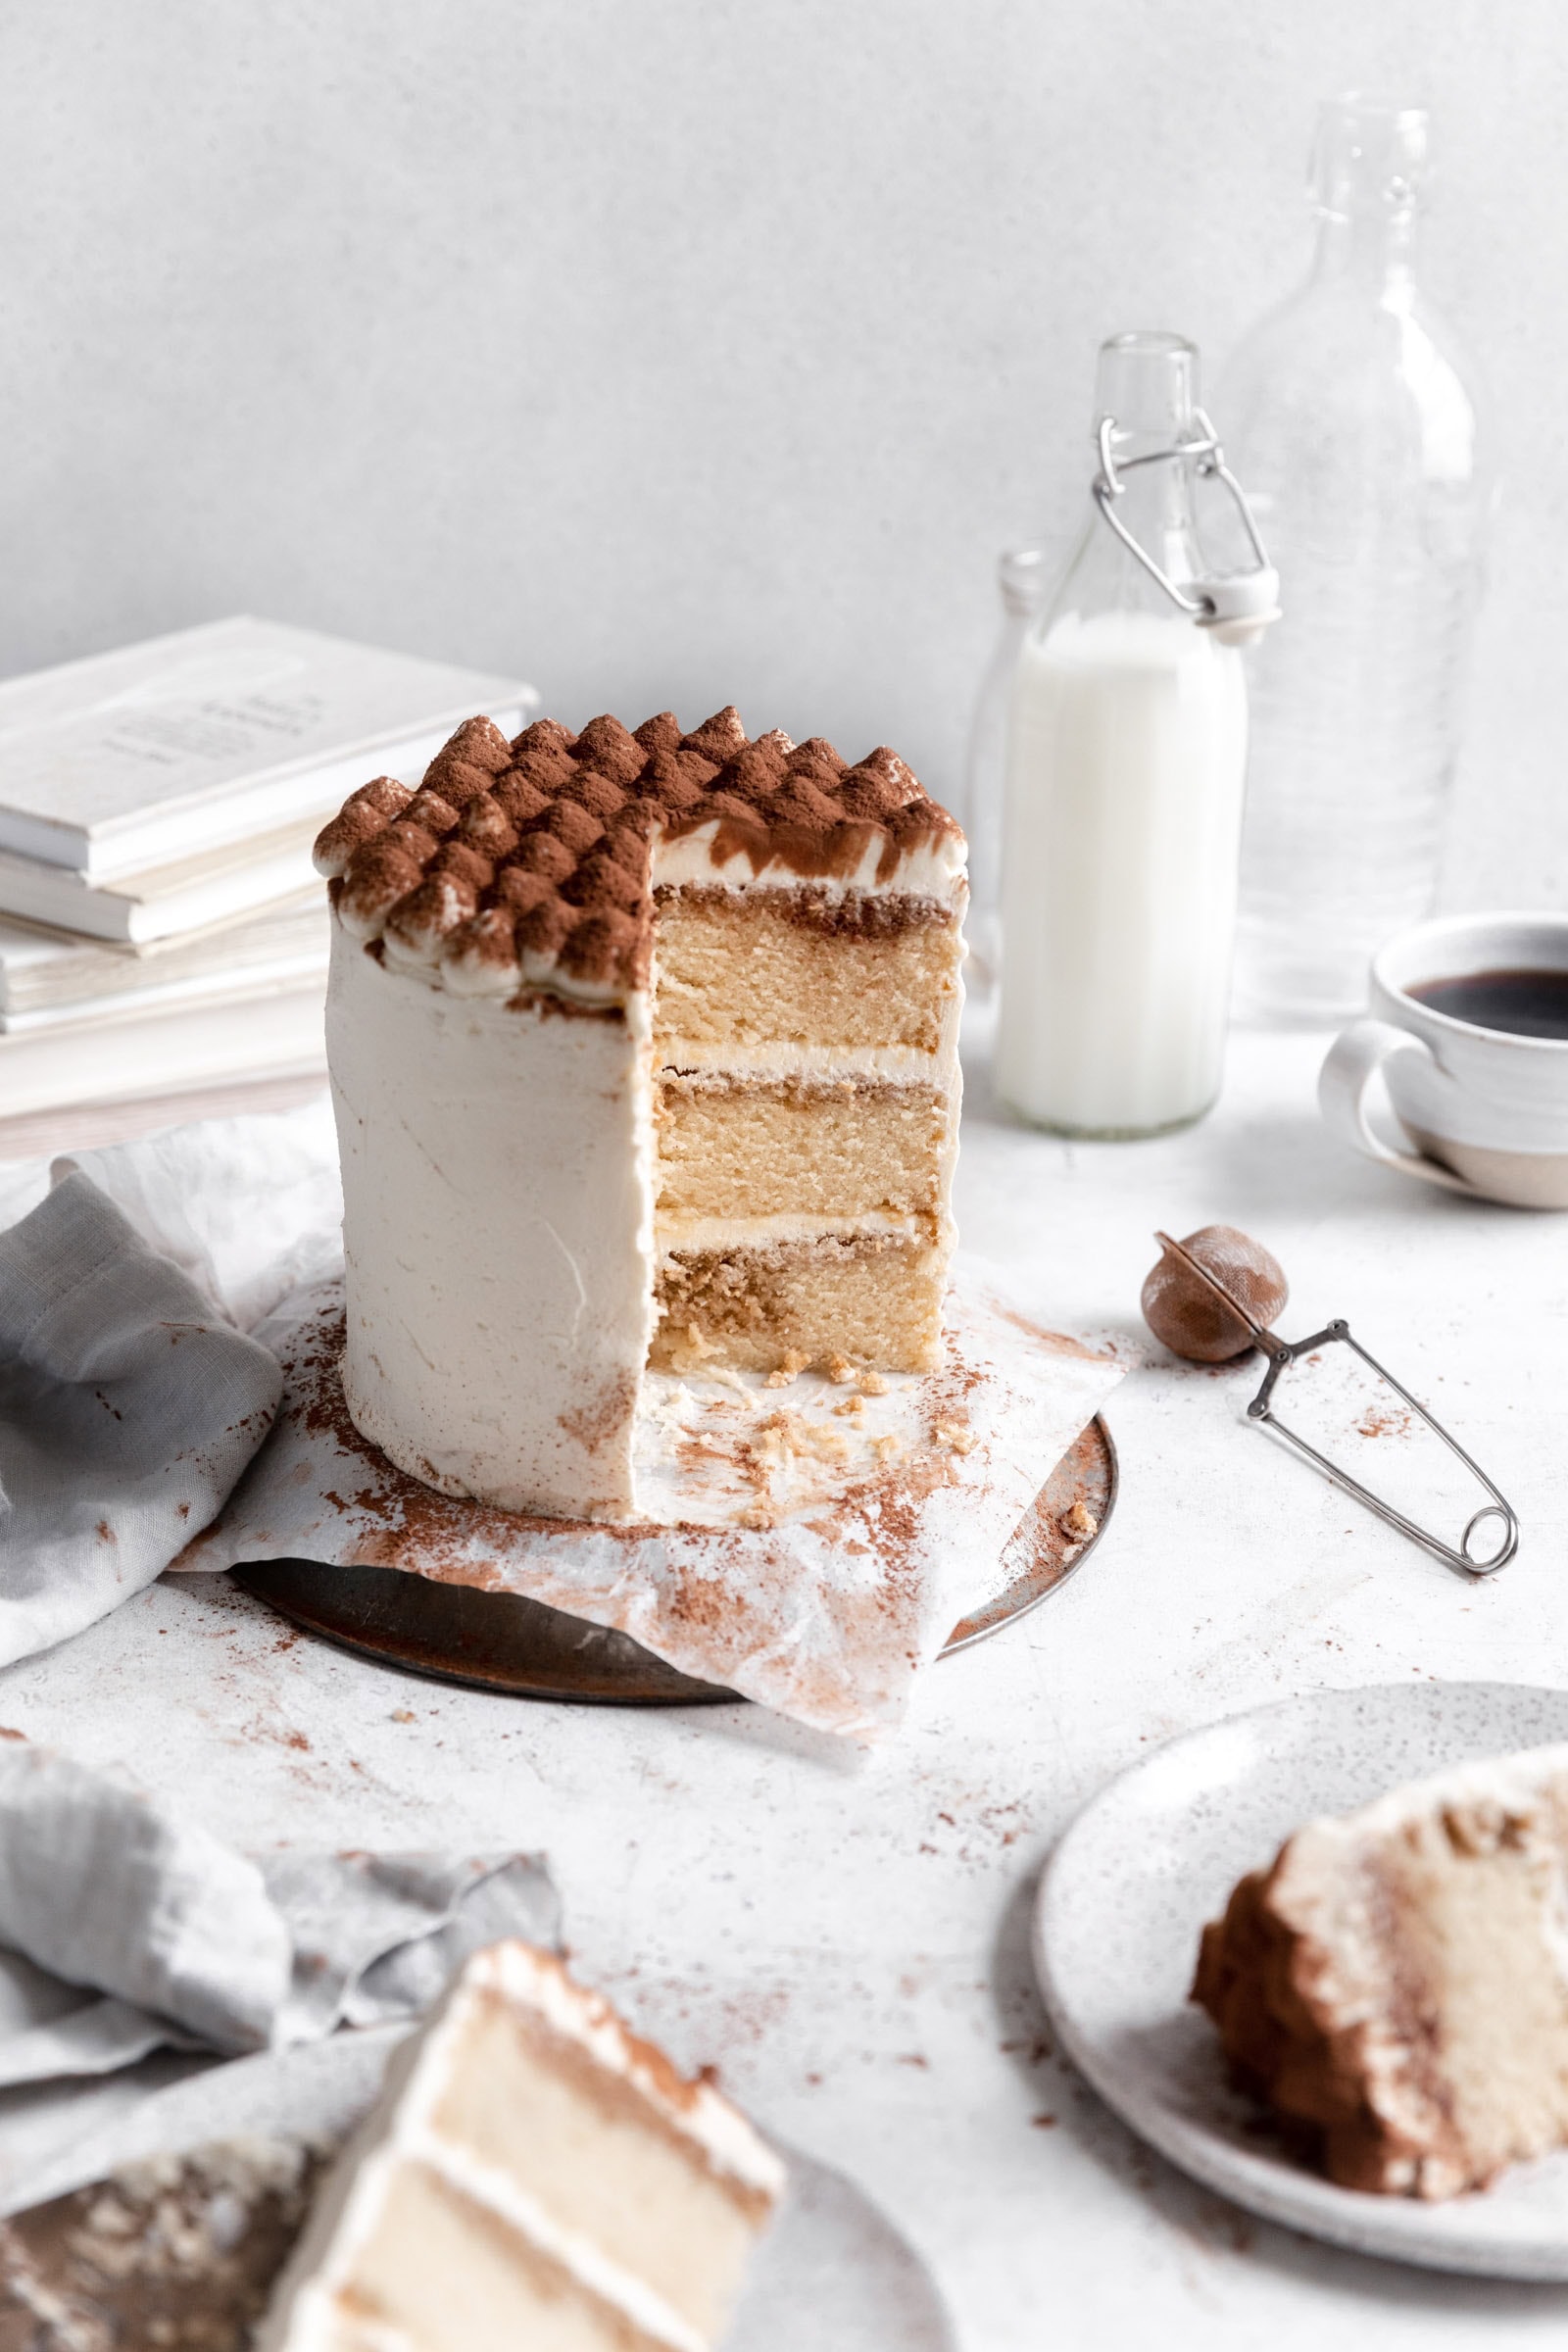 Tiramisu Layer Cake - Your Favorite Italian Dessert in Cake Form!